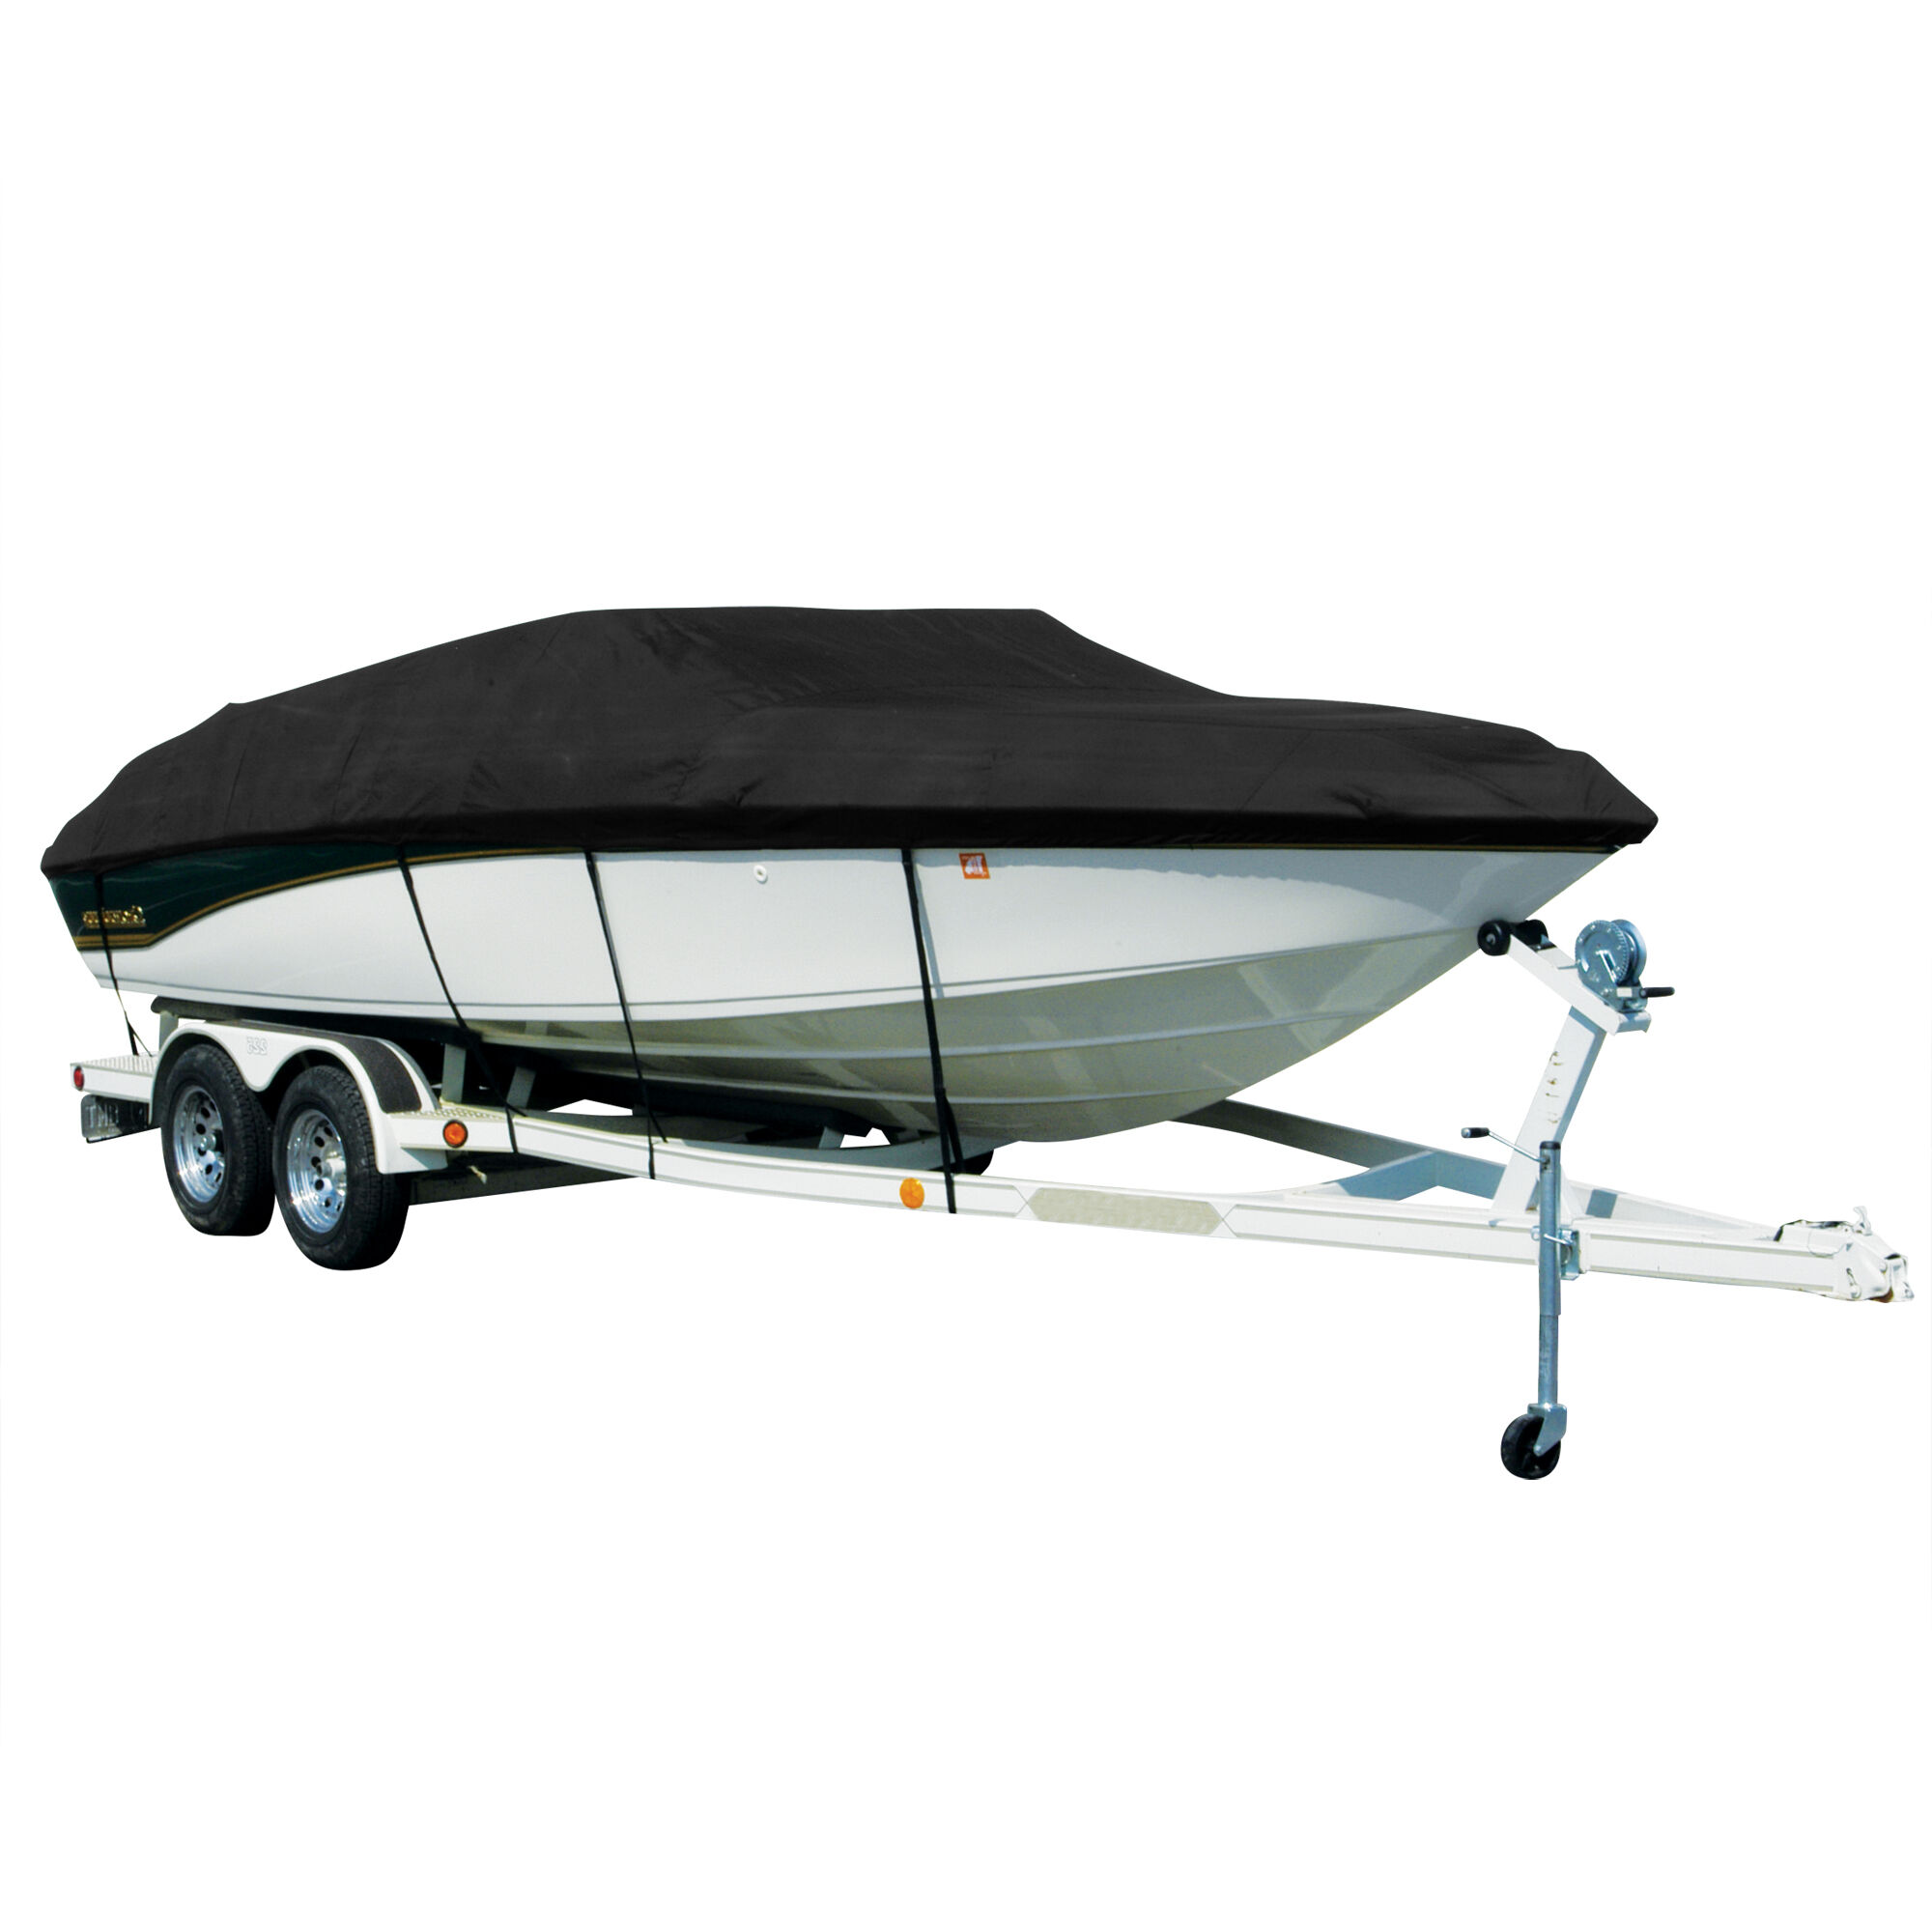 Covermate Exact Fit Sharkskin Boat Cover For SEASWIRL STRIPER 2100 HARD TOP in Black